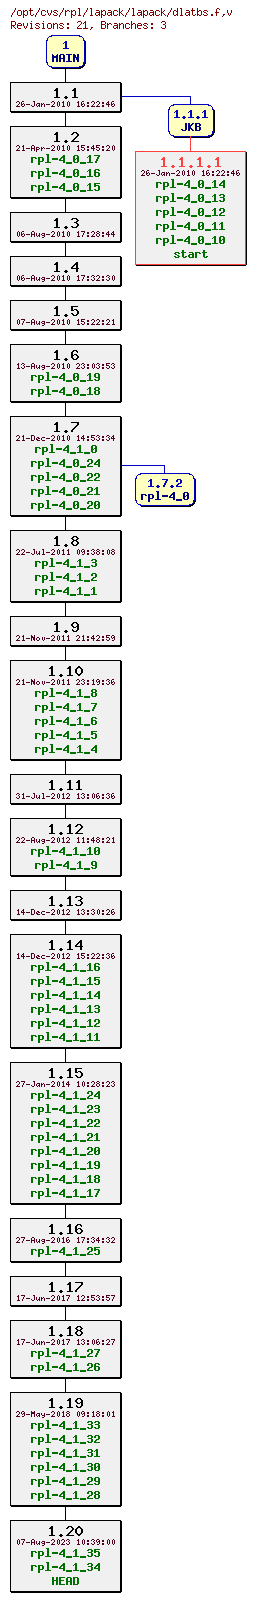 Revision graph of rpl/lapack/lapack/dlatbs.f